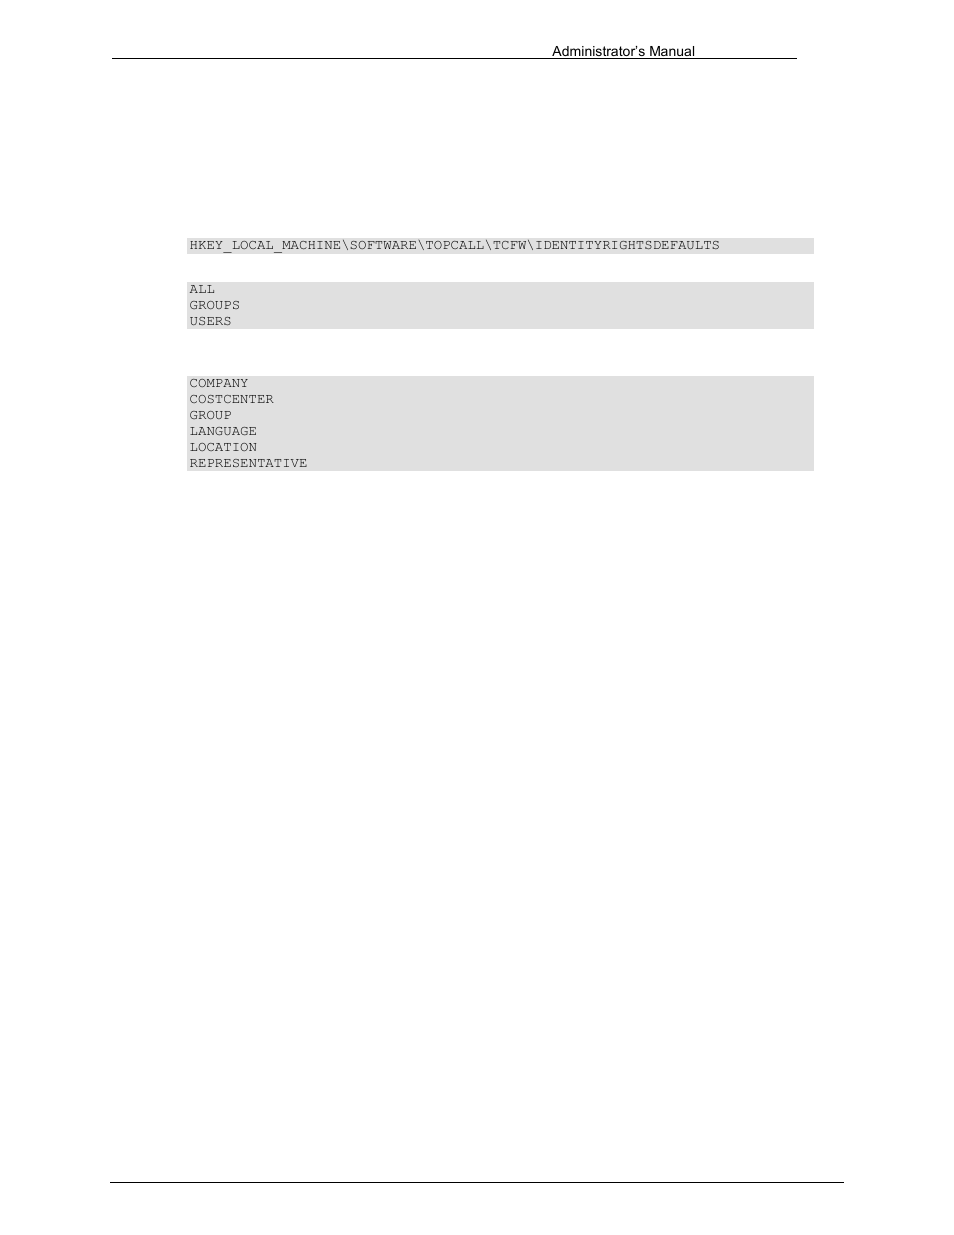 1 setting default identity rights | Kofax Communication Server 9.2.0 User Manual | Page 57 / 203